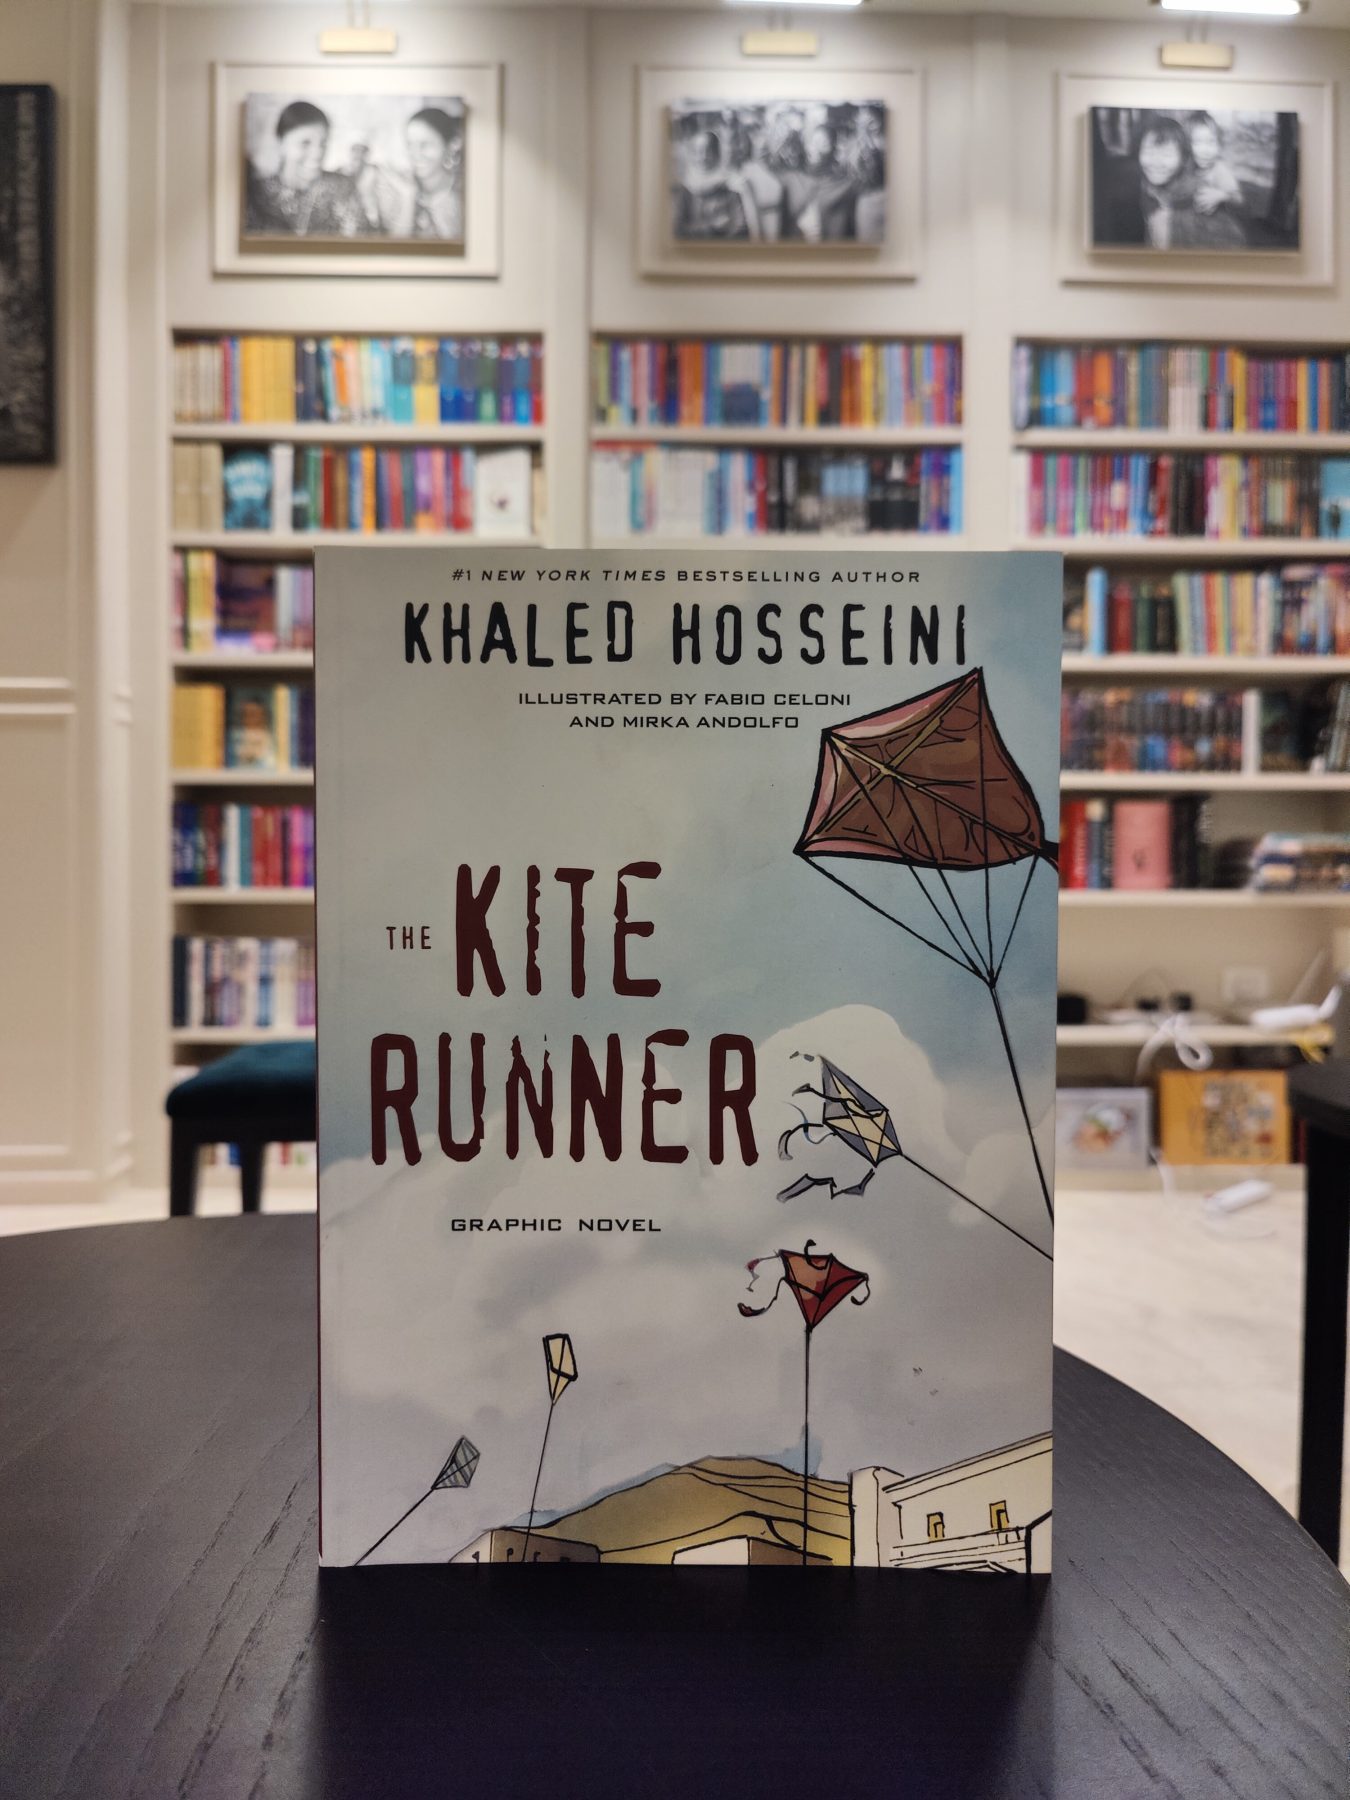 Khaled Hosseini’s The Kite Runner, illustrated by Fabio Celoni and Mirka Andolfo